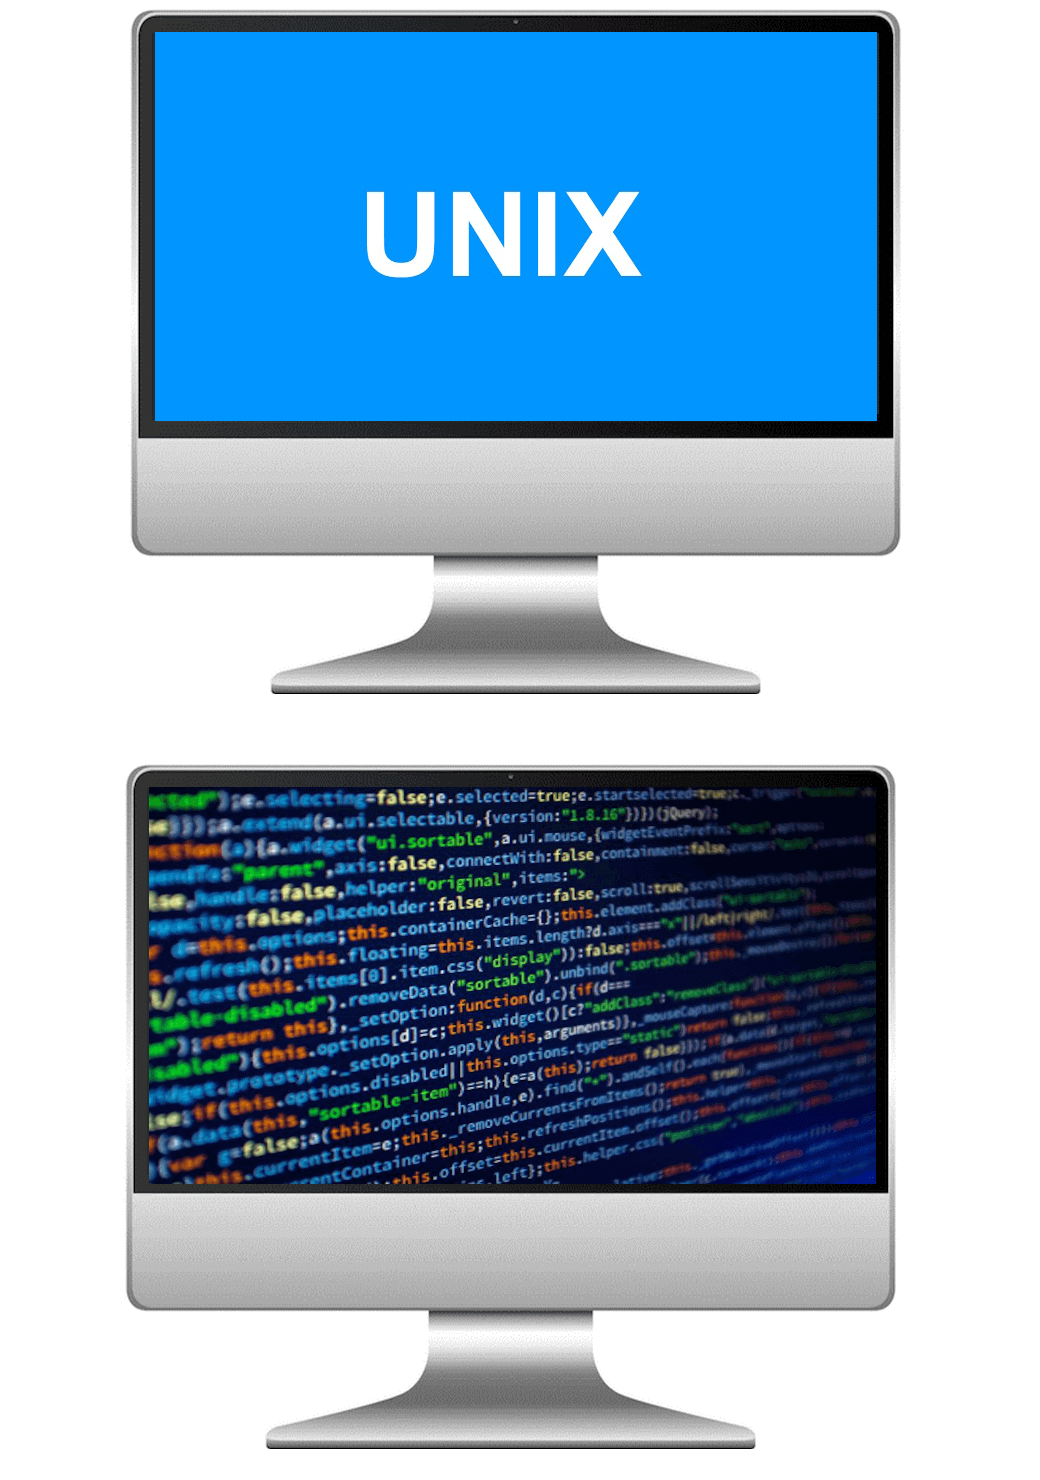 Unix Course in Swansea